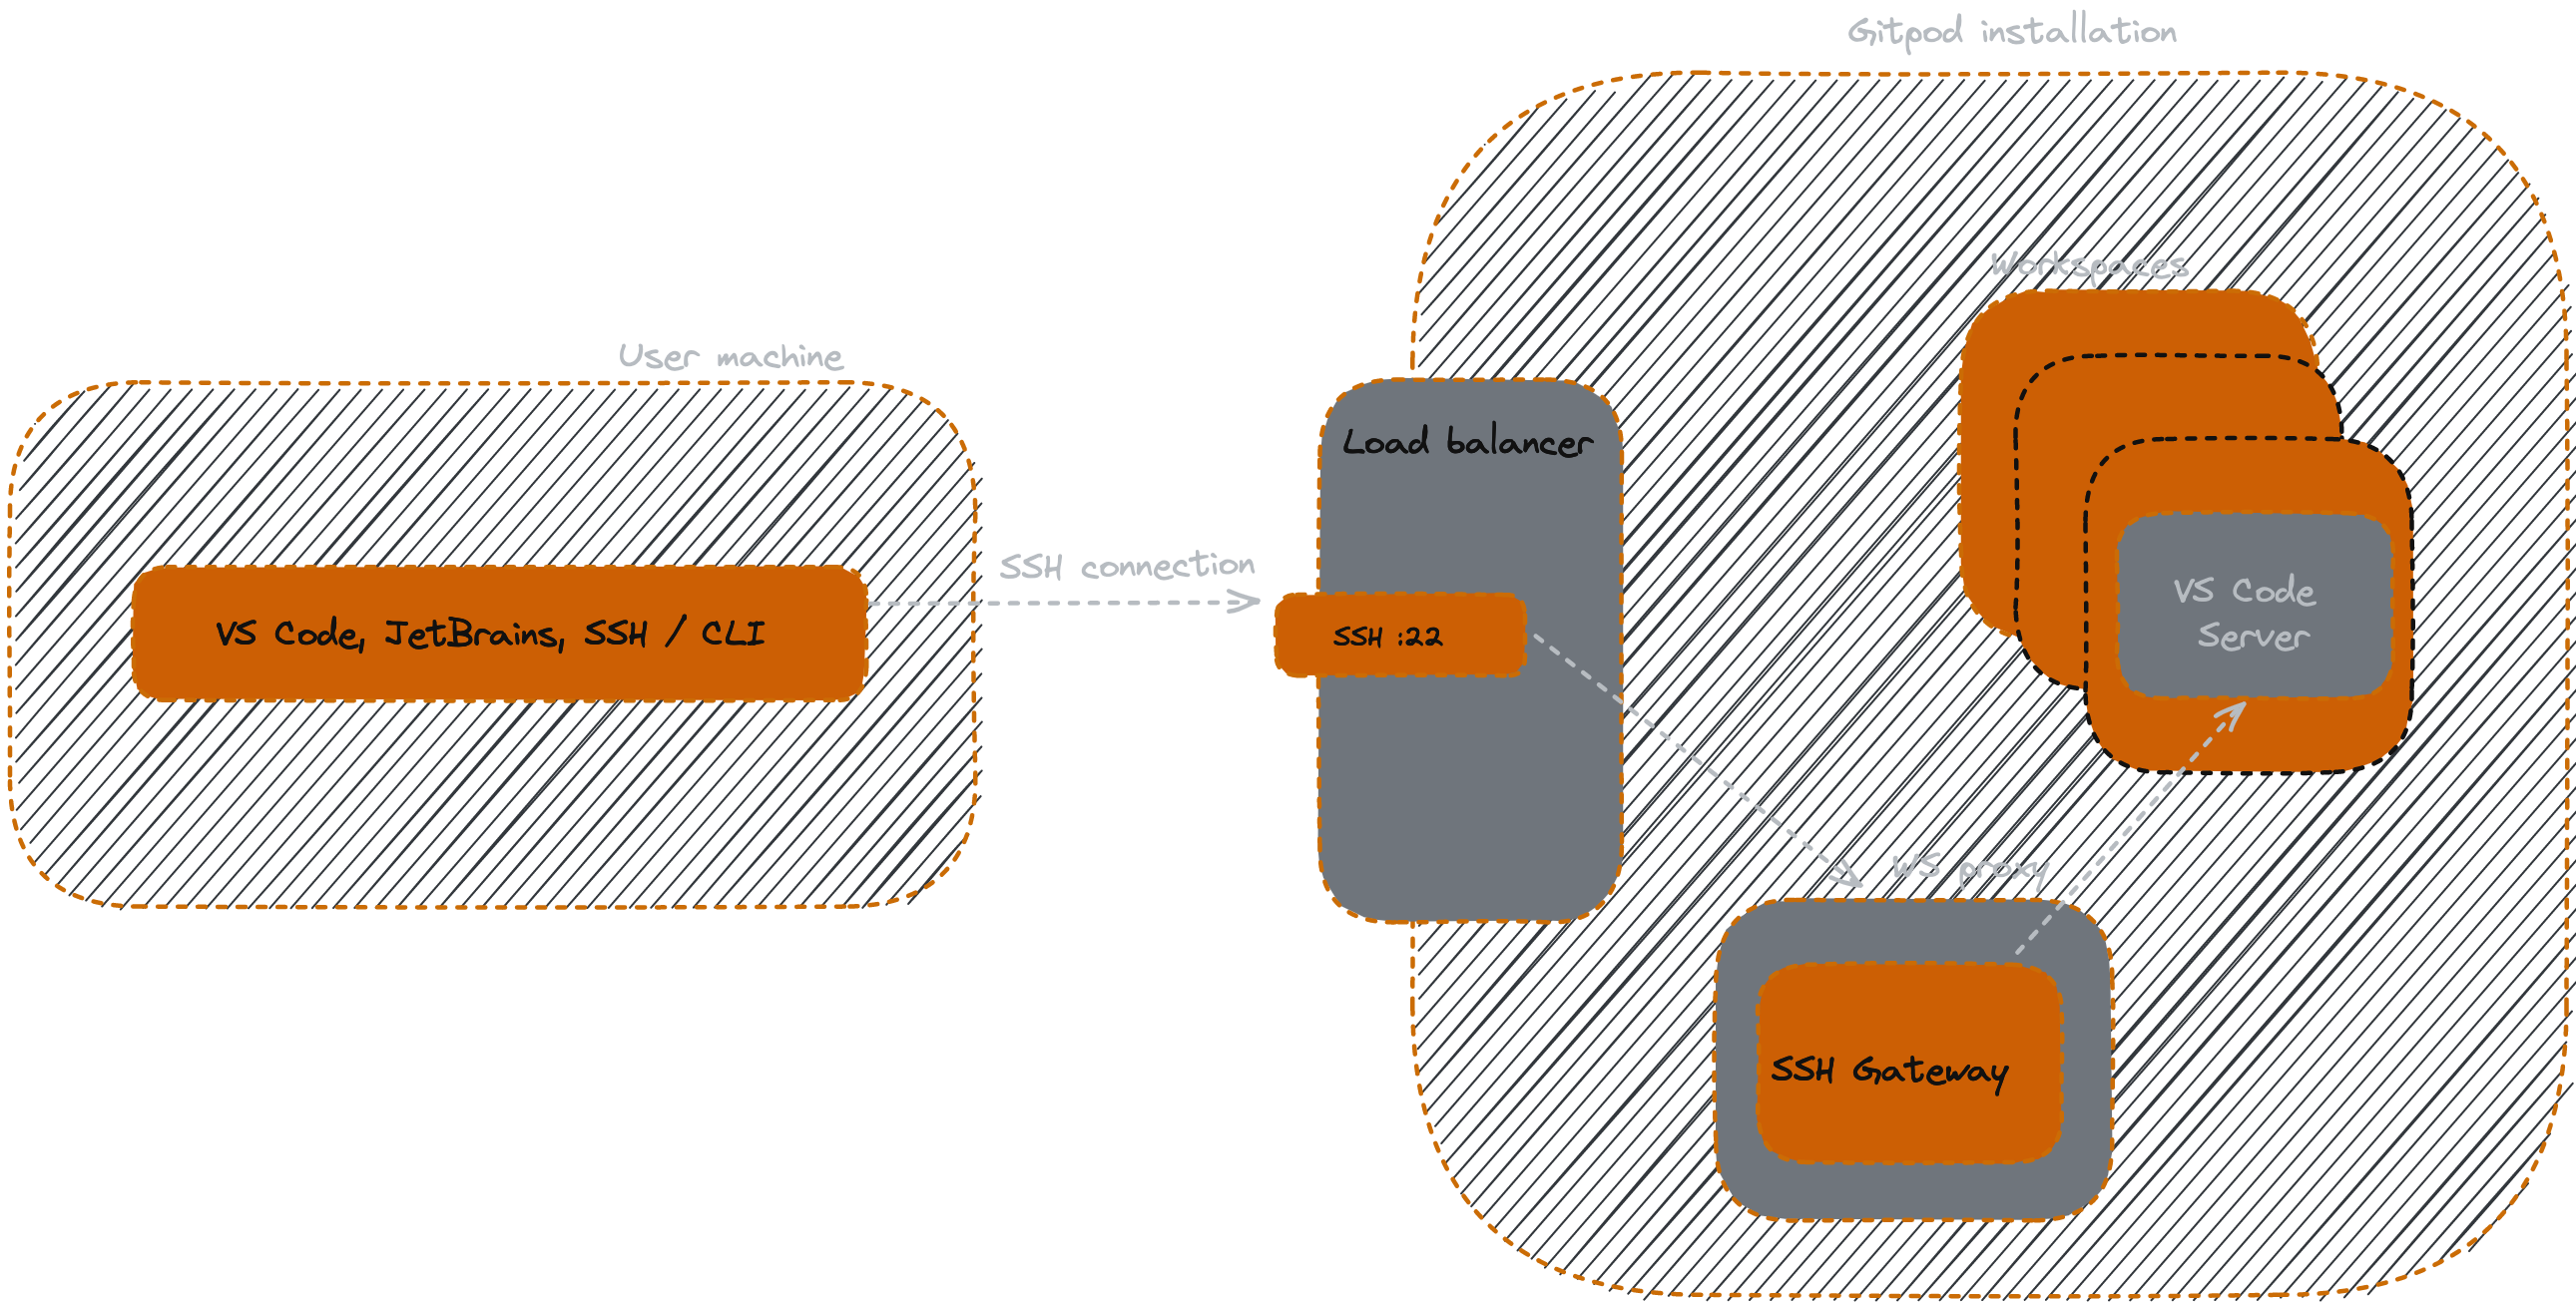 SSH Gateway architecture in Gitpod